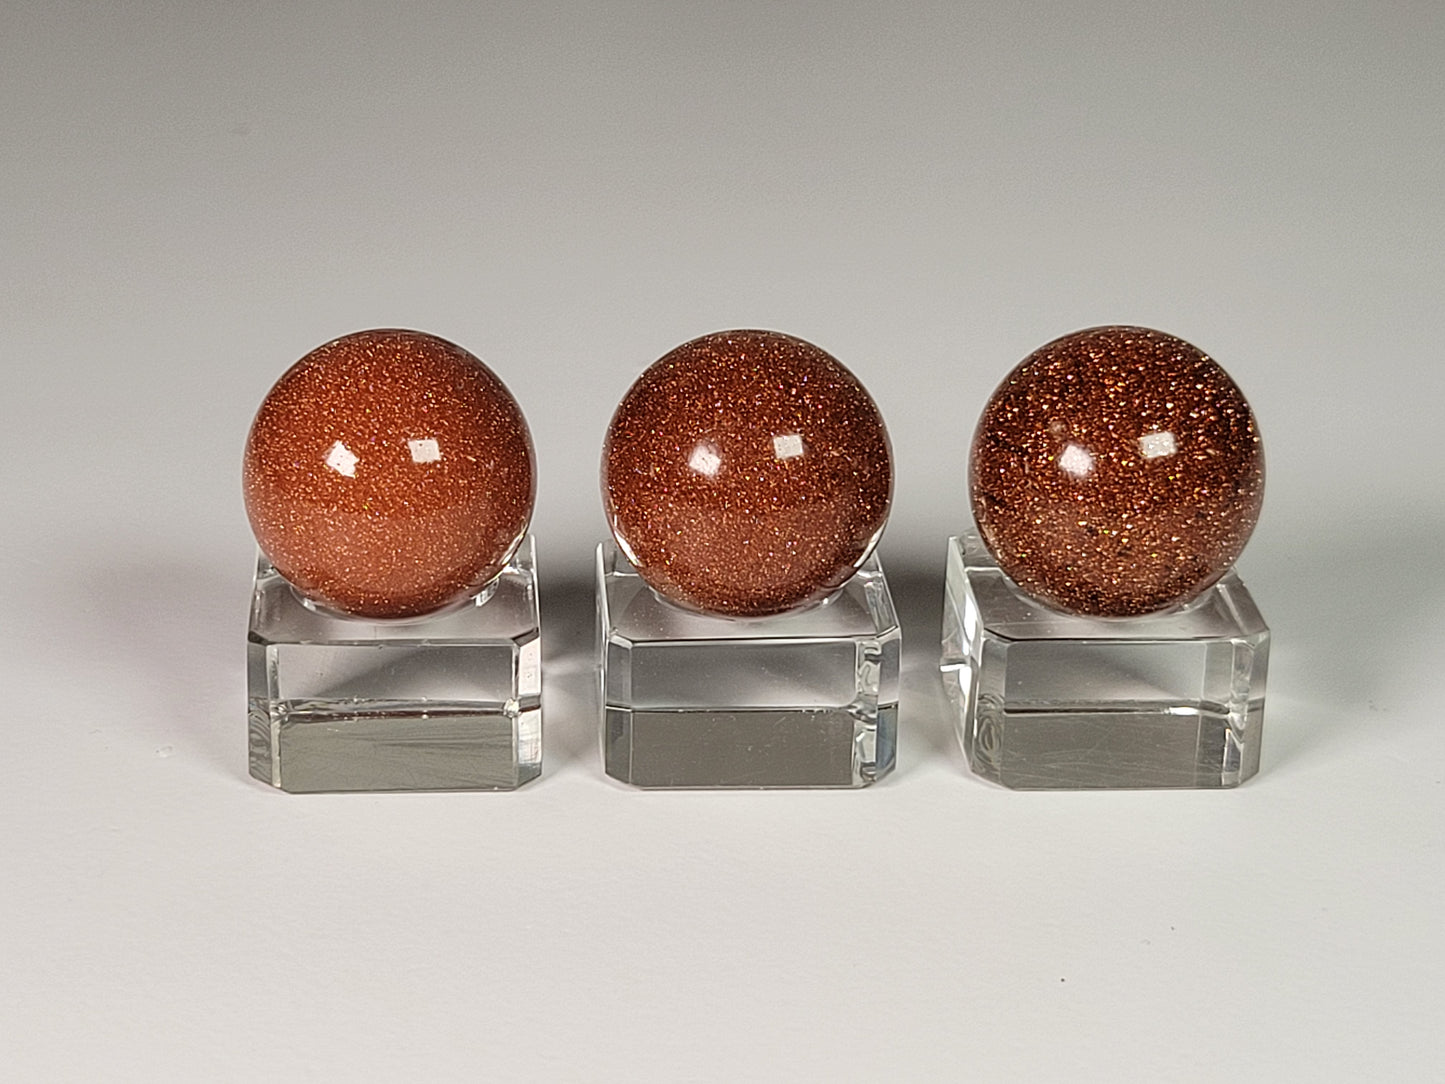 Gold Sandstone Spheres